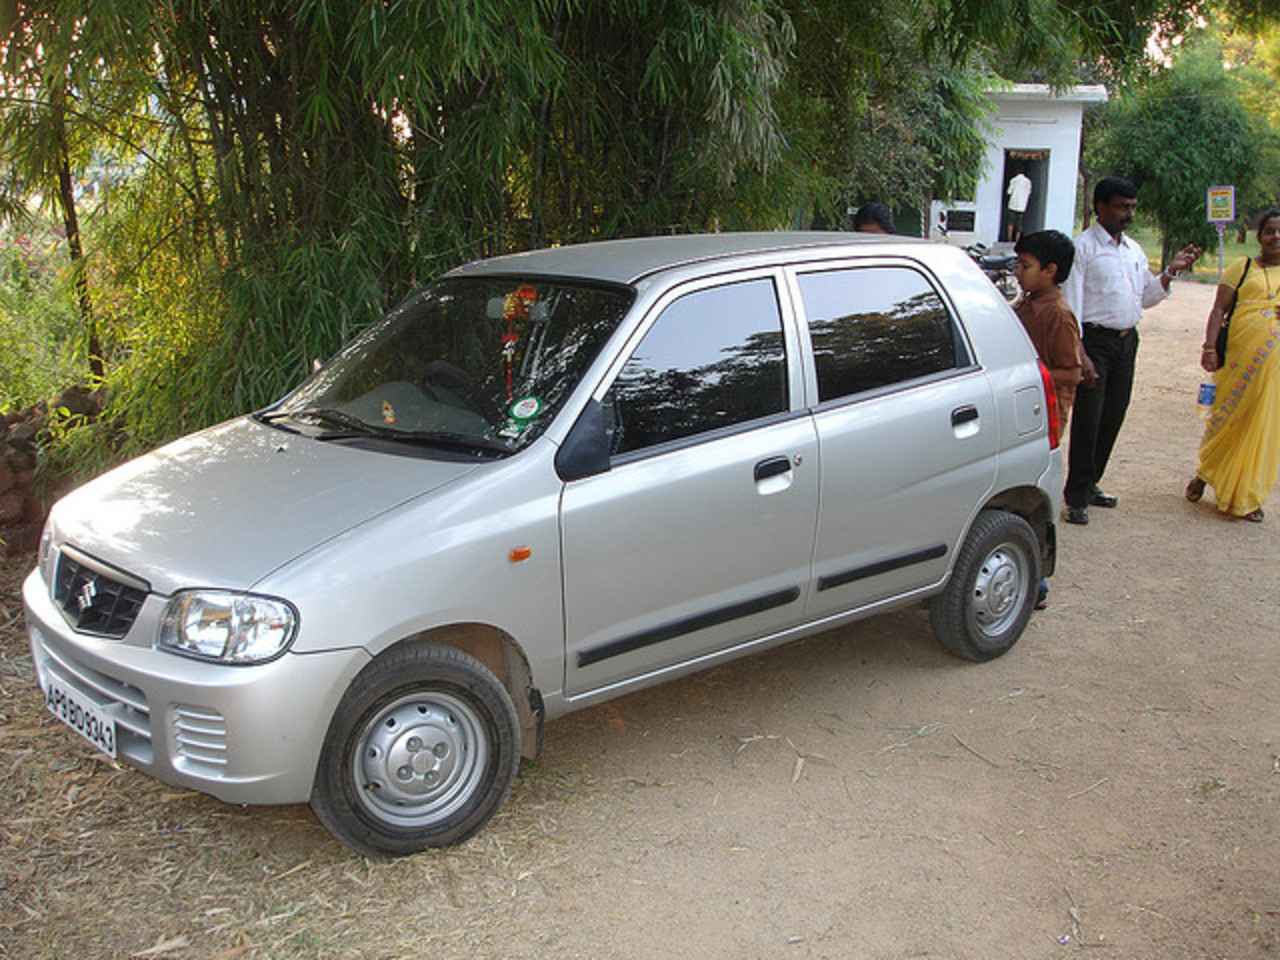 Maruti Alto Car | Flickr - Photo Sharing!